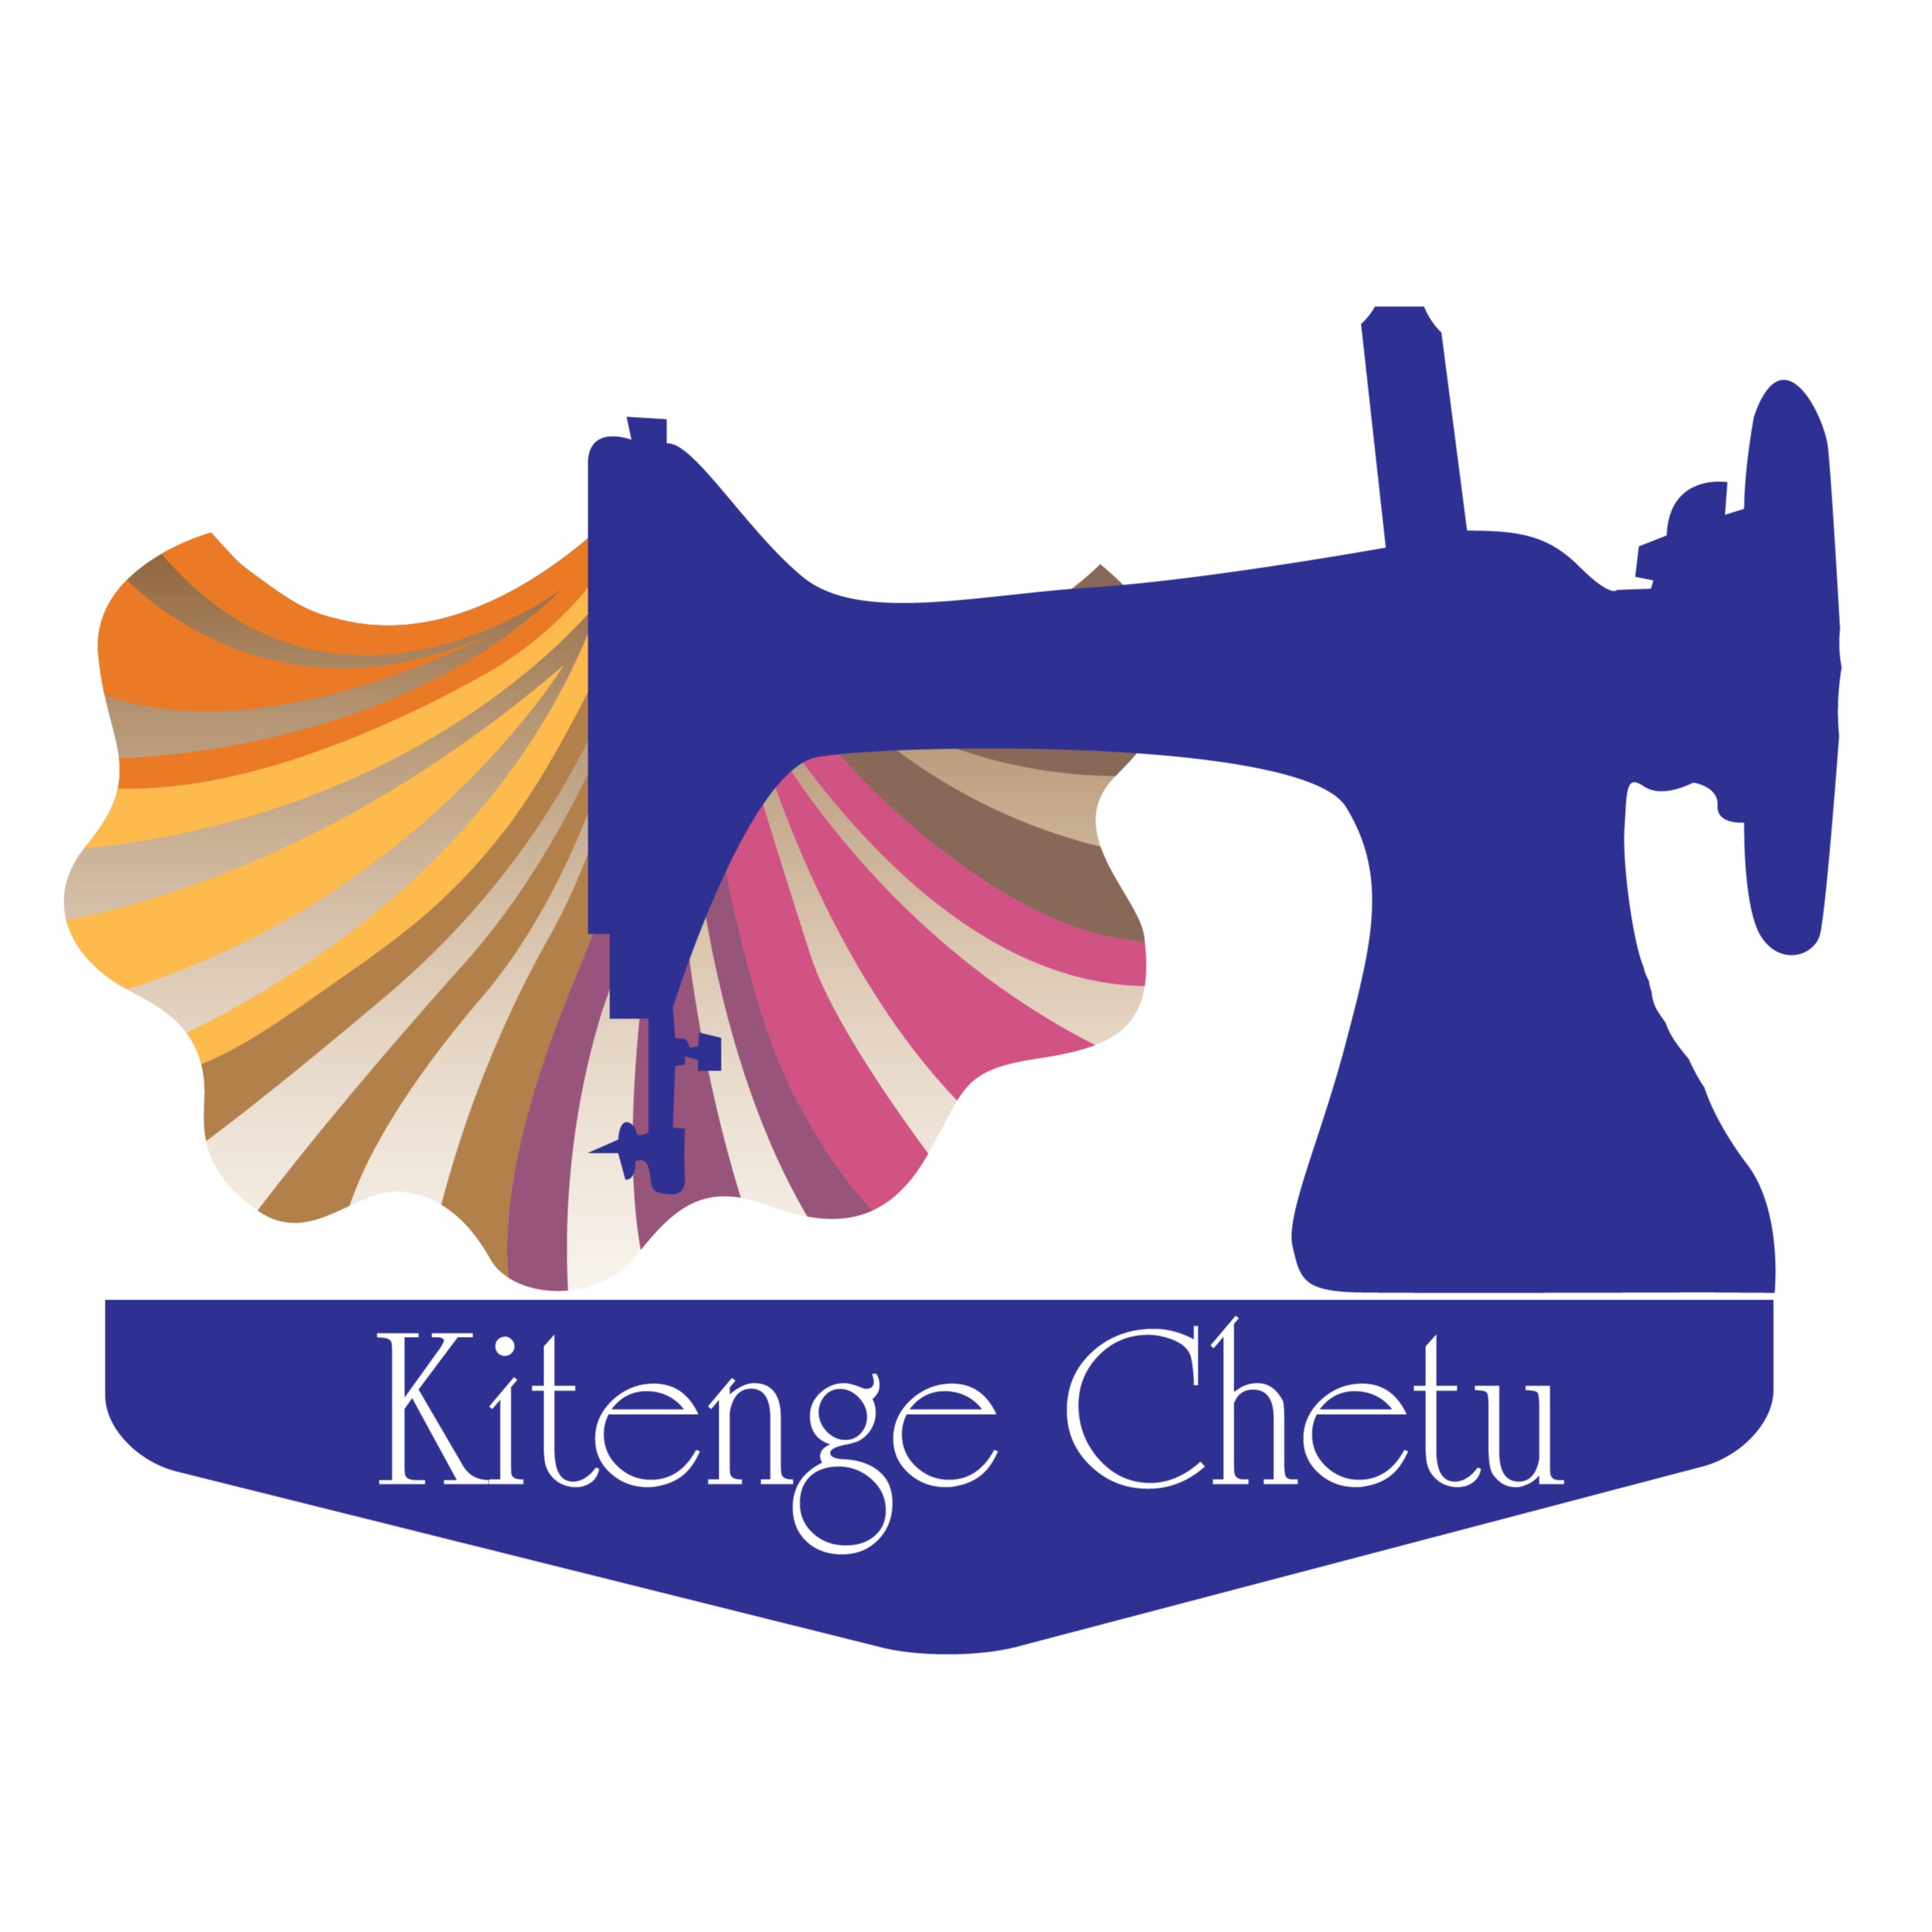 Printed Kitenge